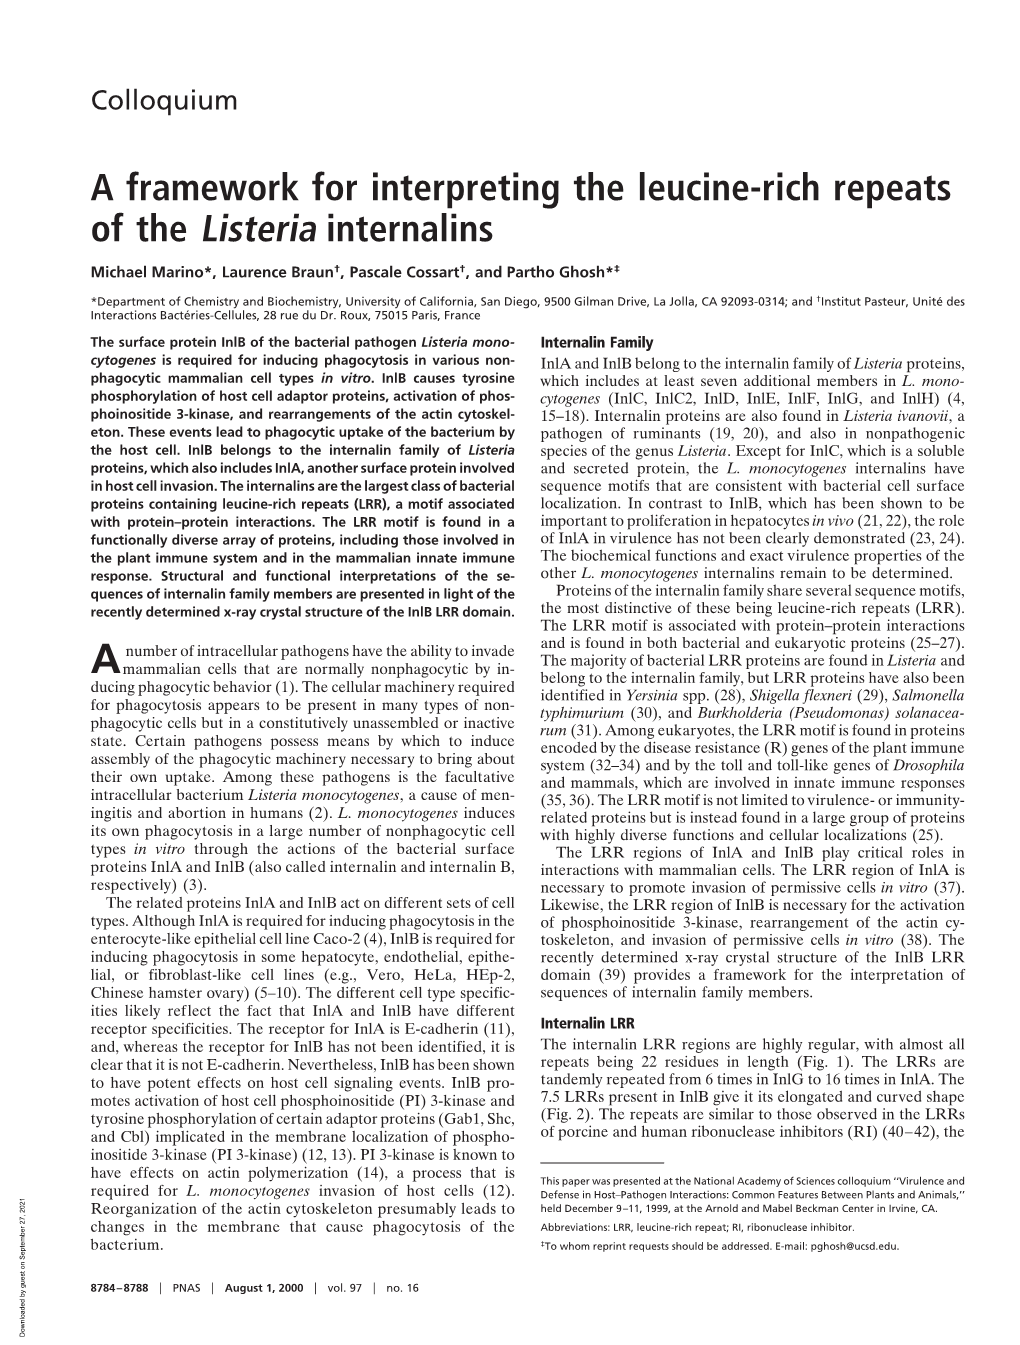 A Framework for Interpreting the Leucine-Rich Repeats of the Listeria Internalins